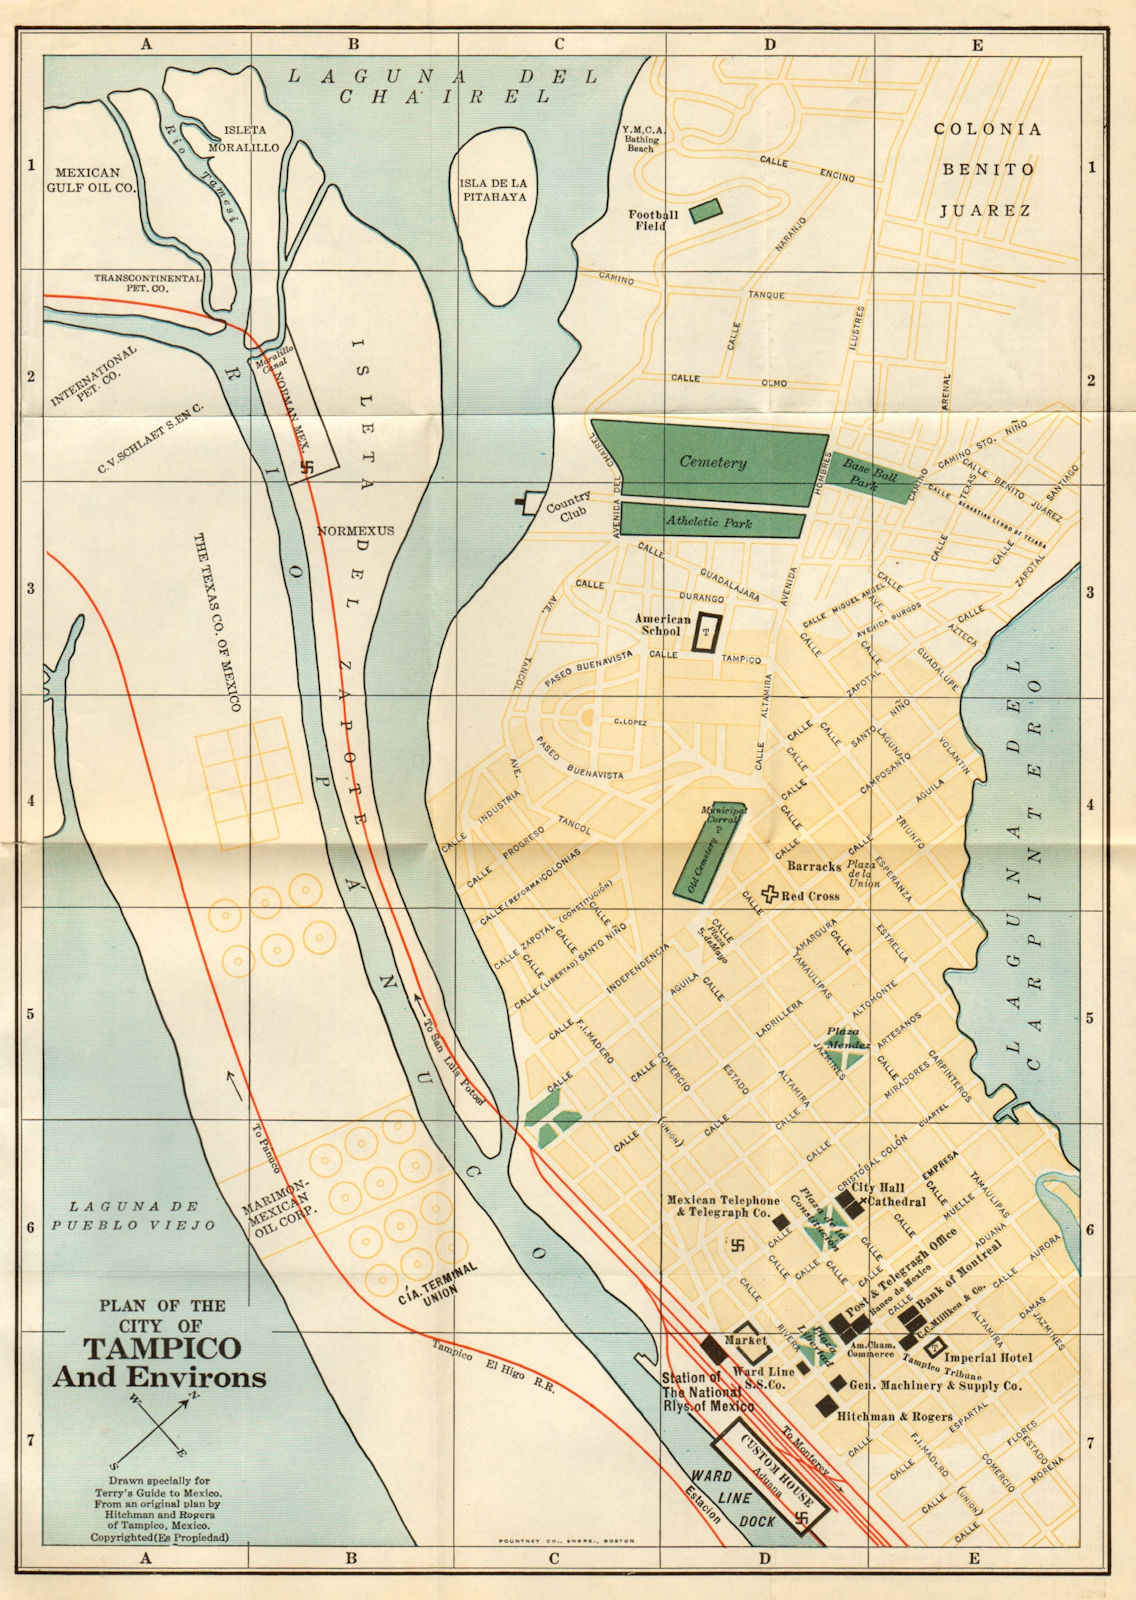 Associate Product Plan of the city of TAMPICO, Mexico. Mapa de la ciudad. Town plan 1935 old